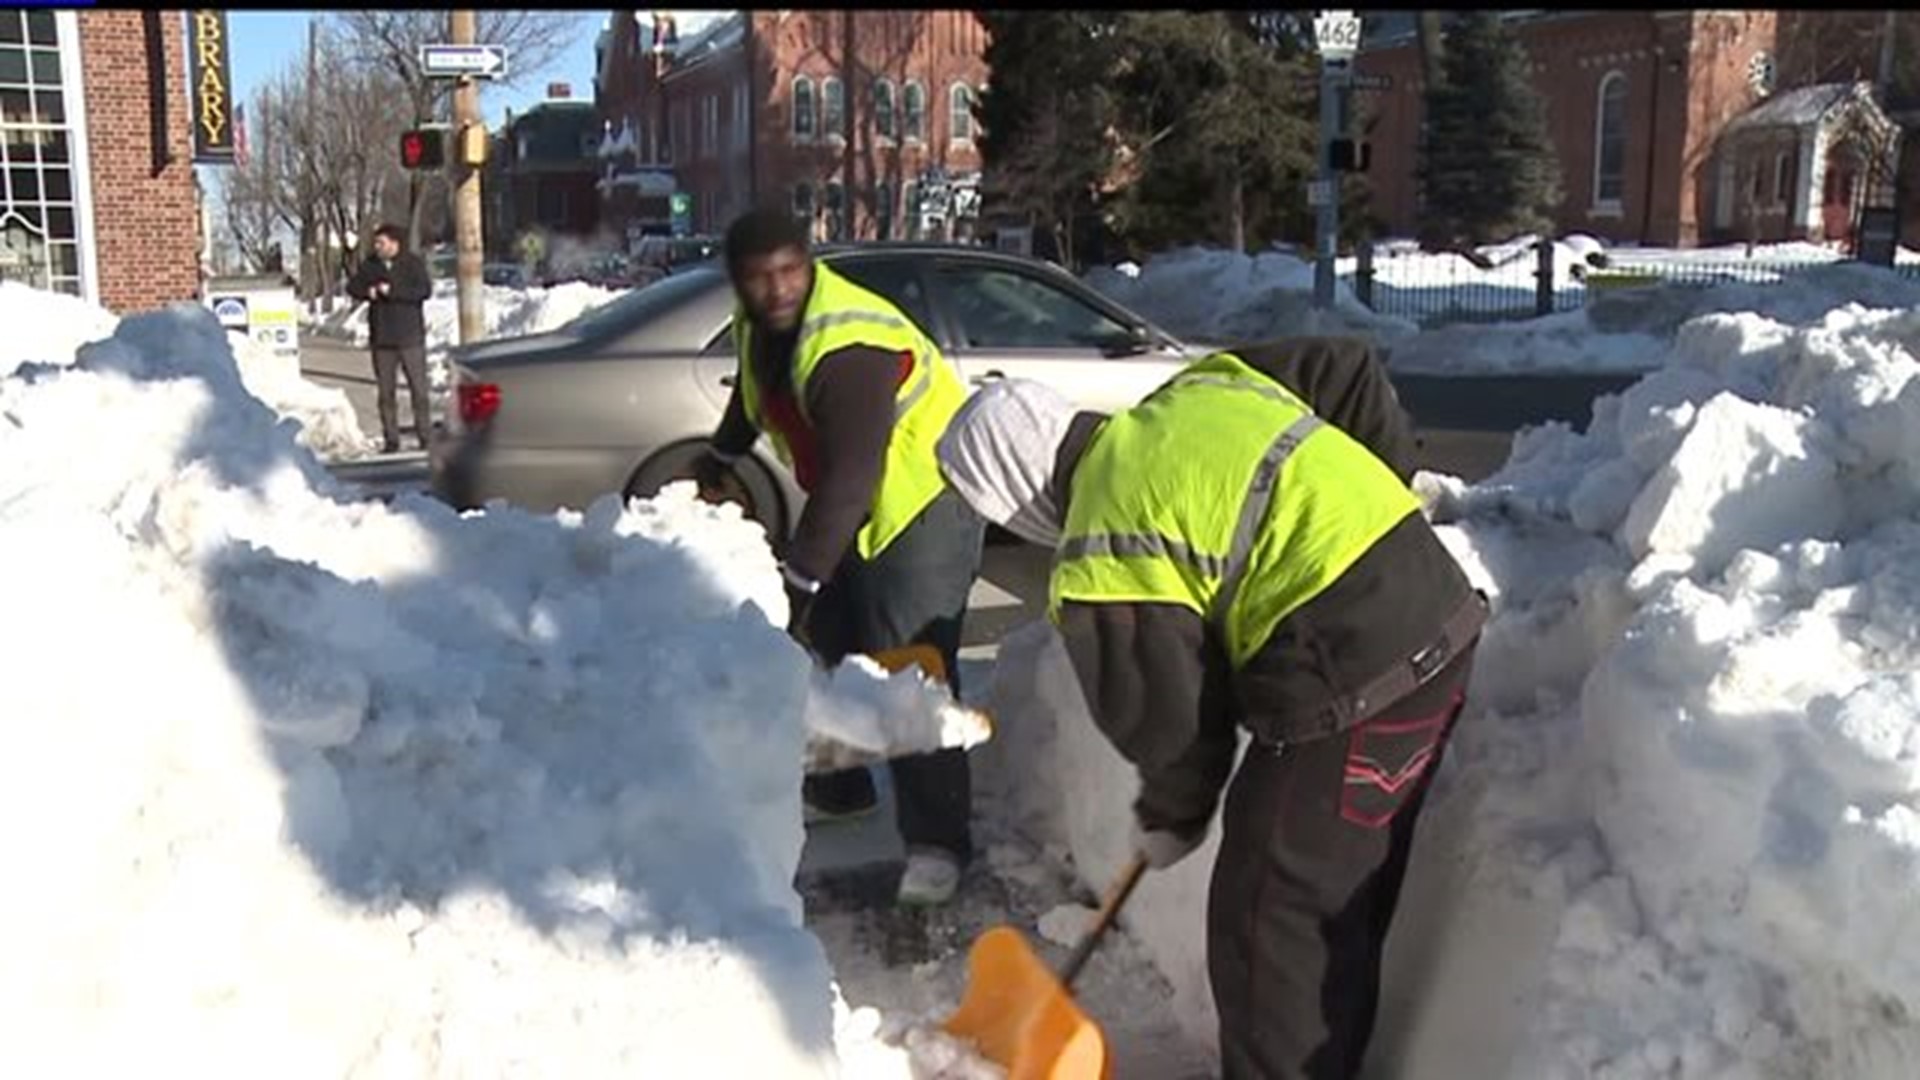 Prison inmates help dig out crosswalks and sidewalks buried under snow in York City